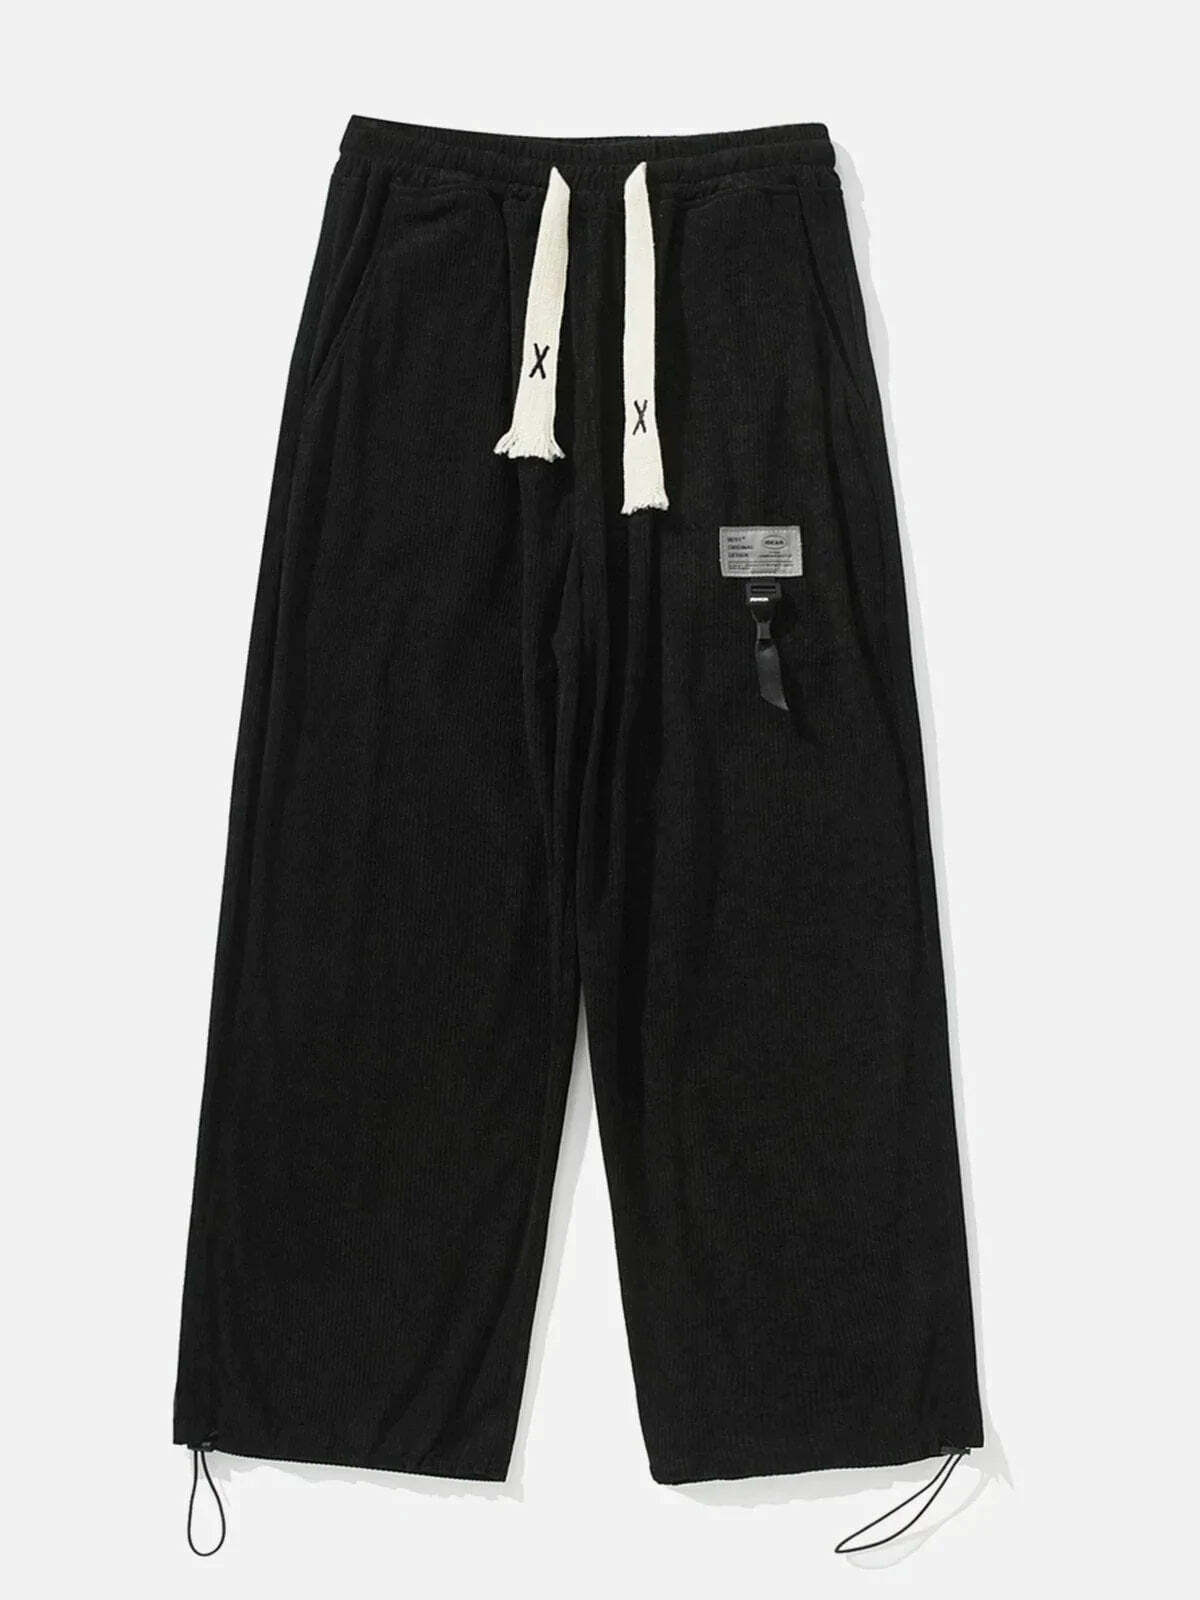 custom labeled drawstring pants youthful & trendy streetwear 8657